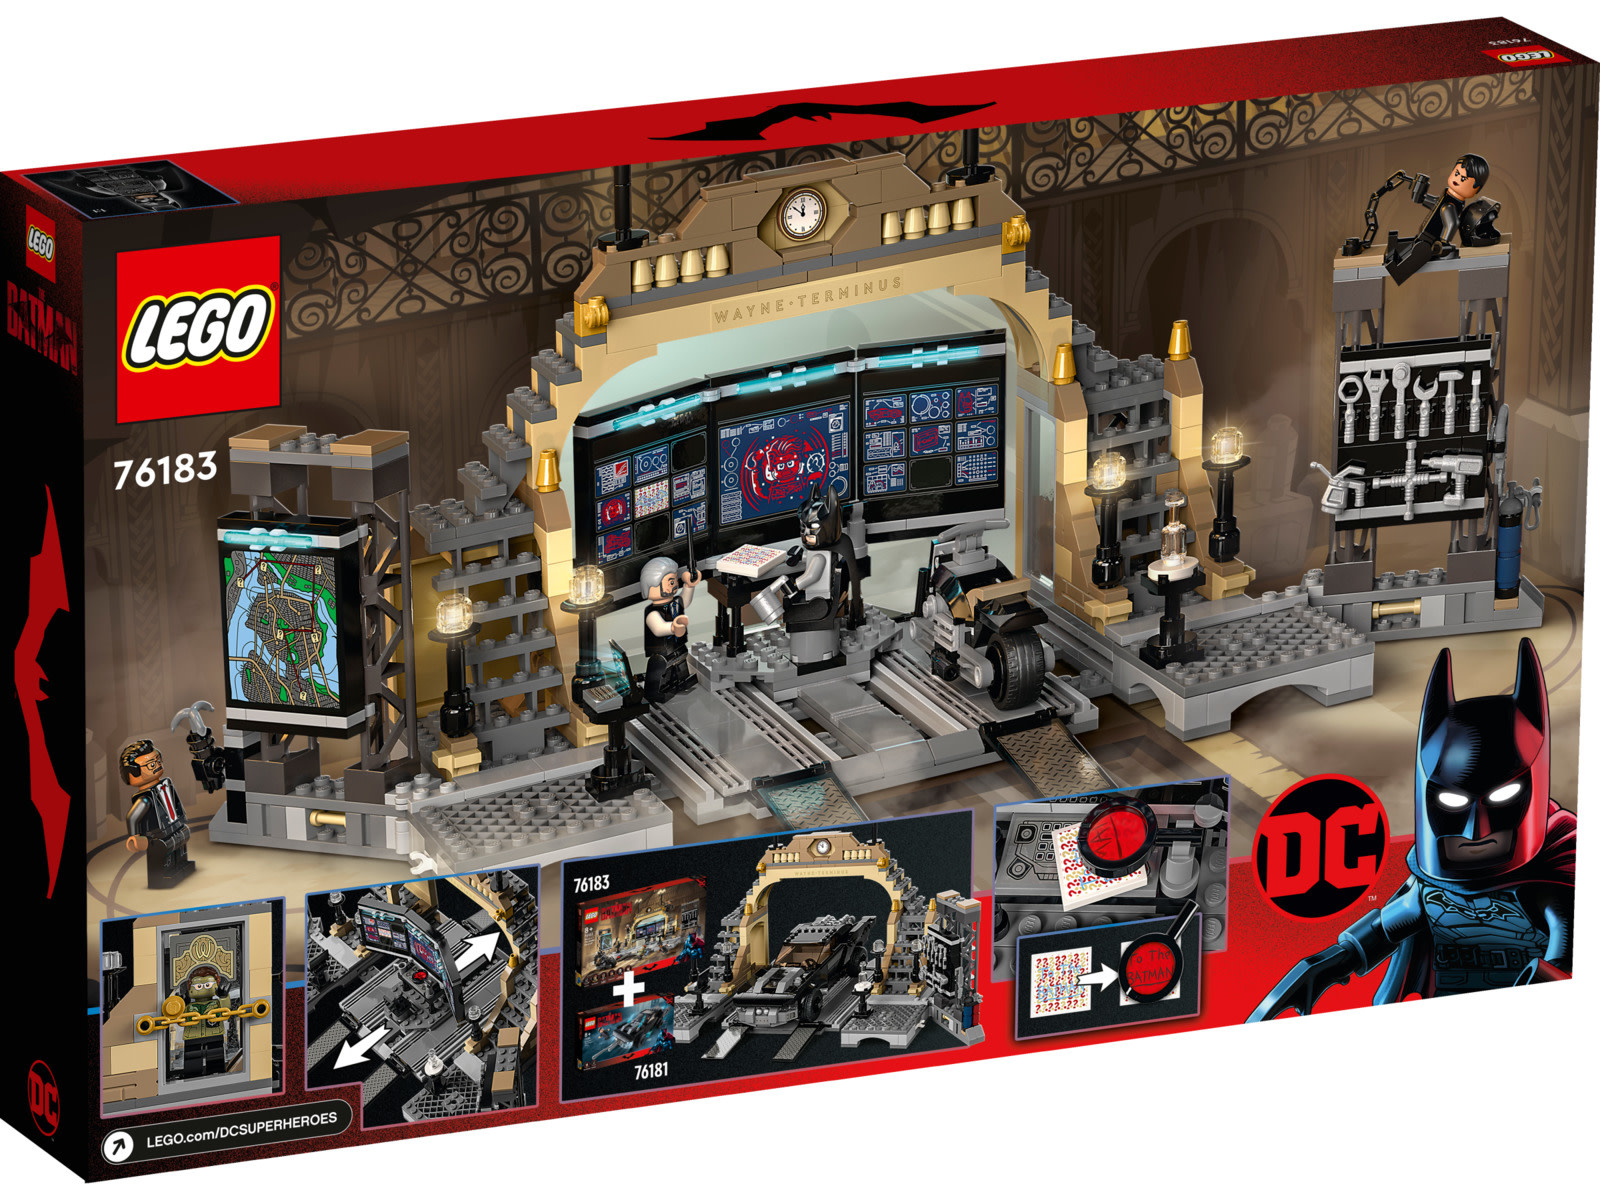 Lego Lego Batman 76183 - Batcave l'affrontement du Sphinx